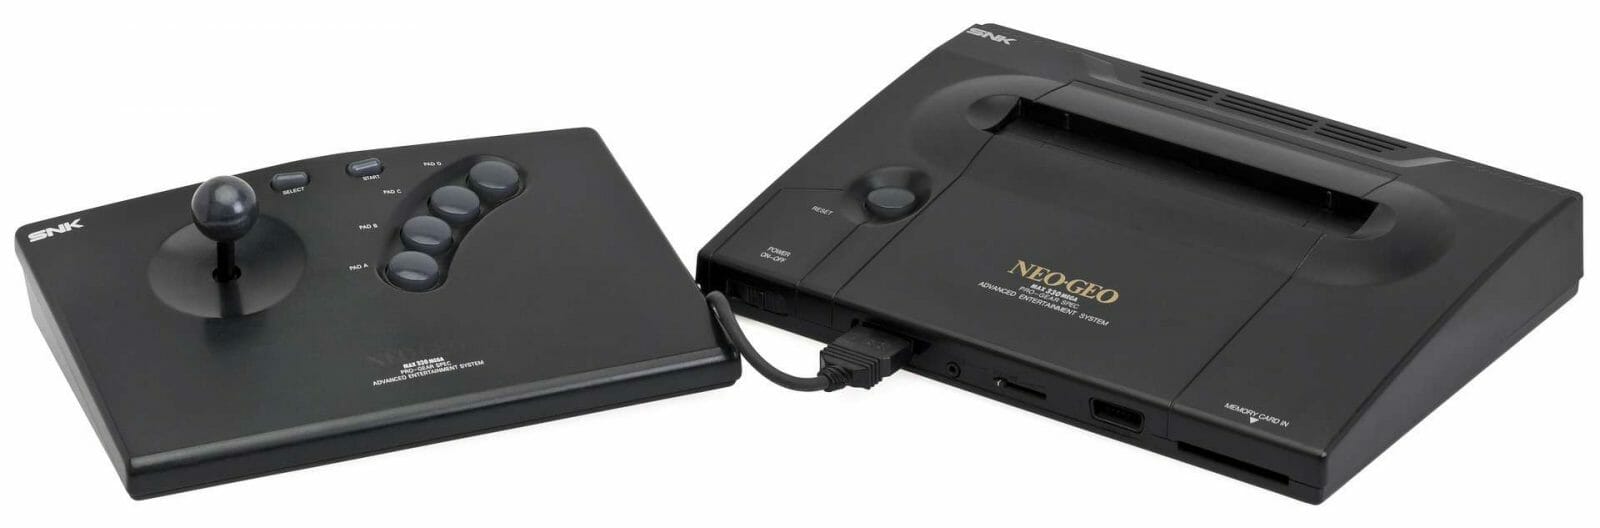 Image of Neo Geo Console